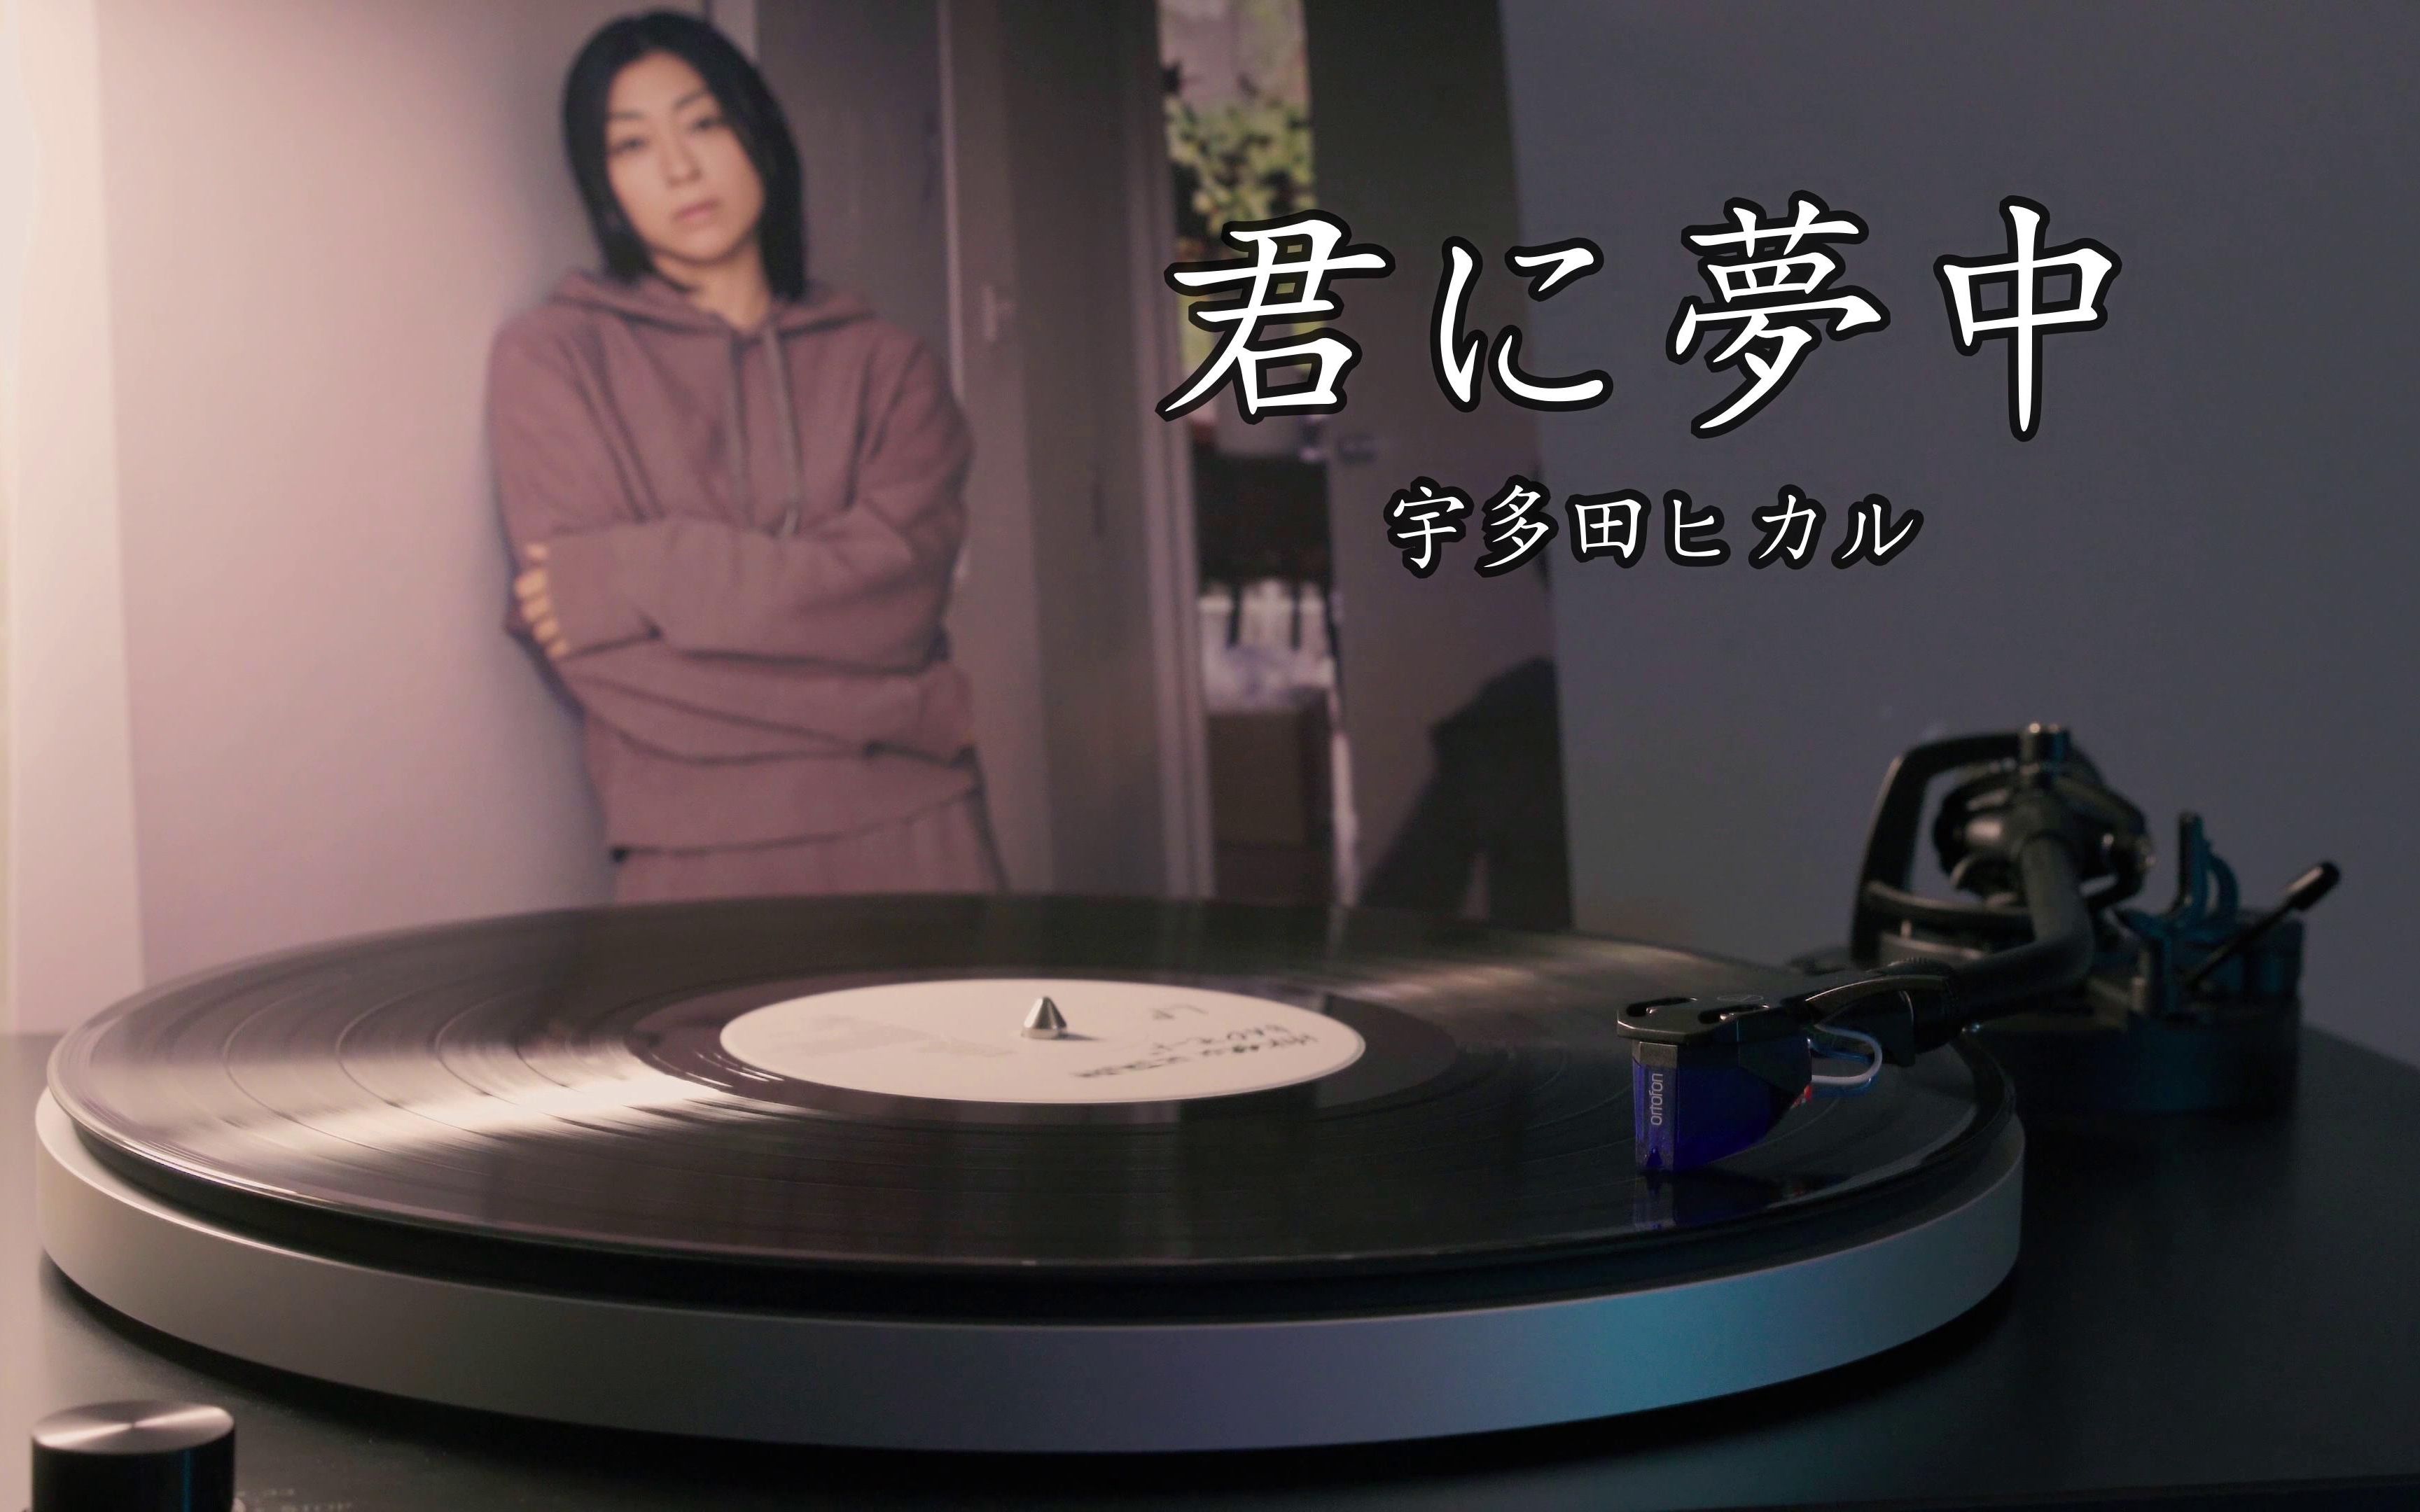 【4K】宇多田光《君に夢中》高音质黑胶唱片试听